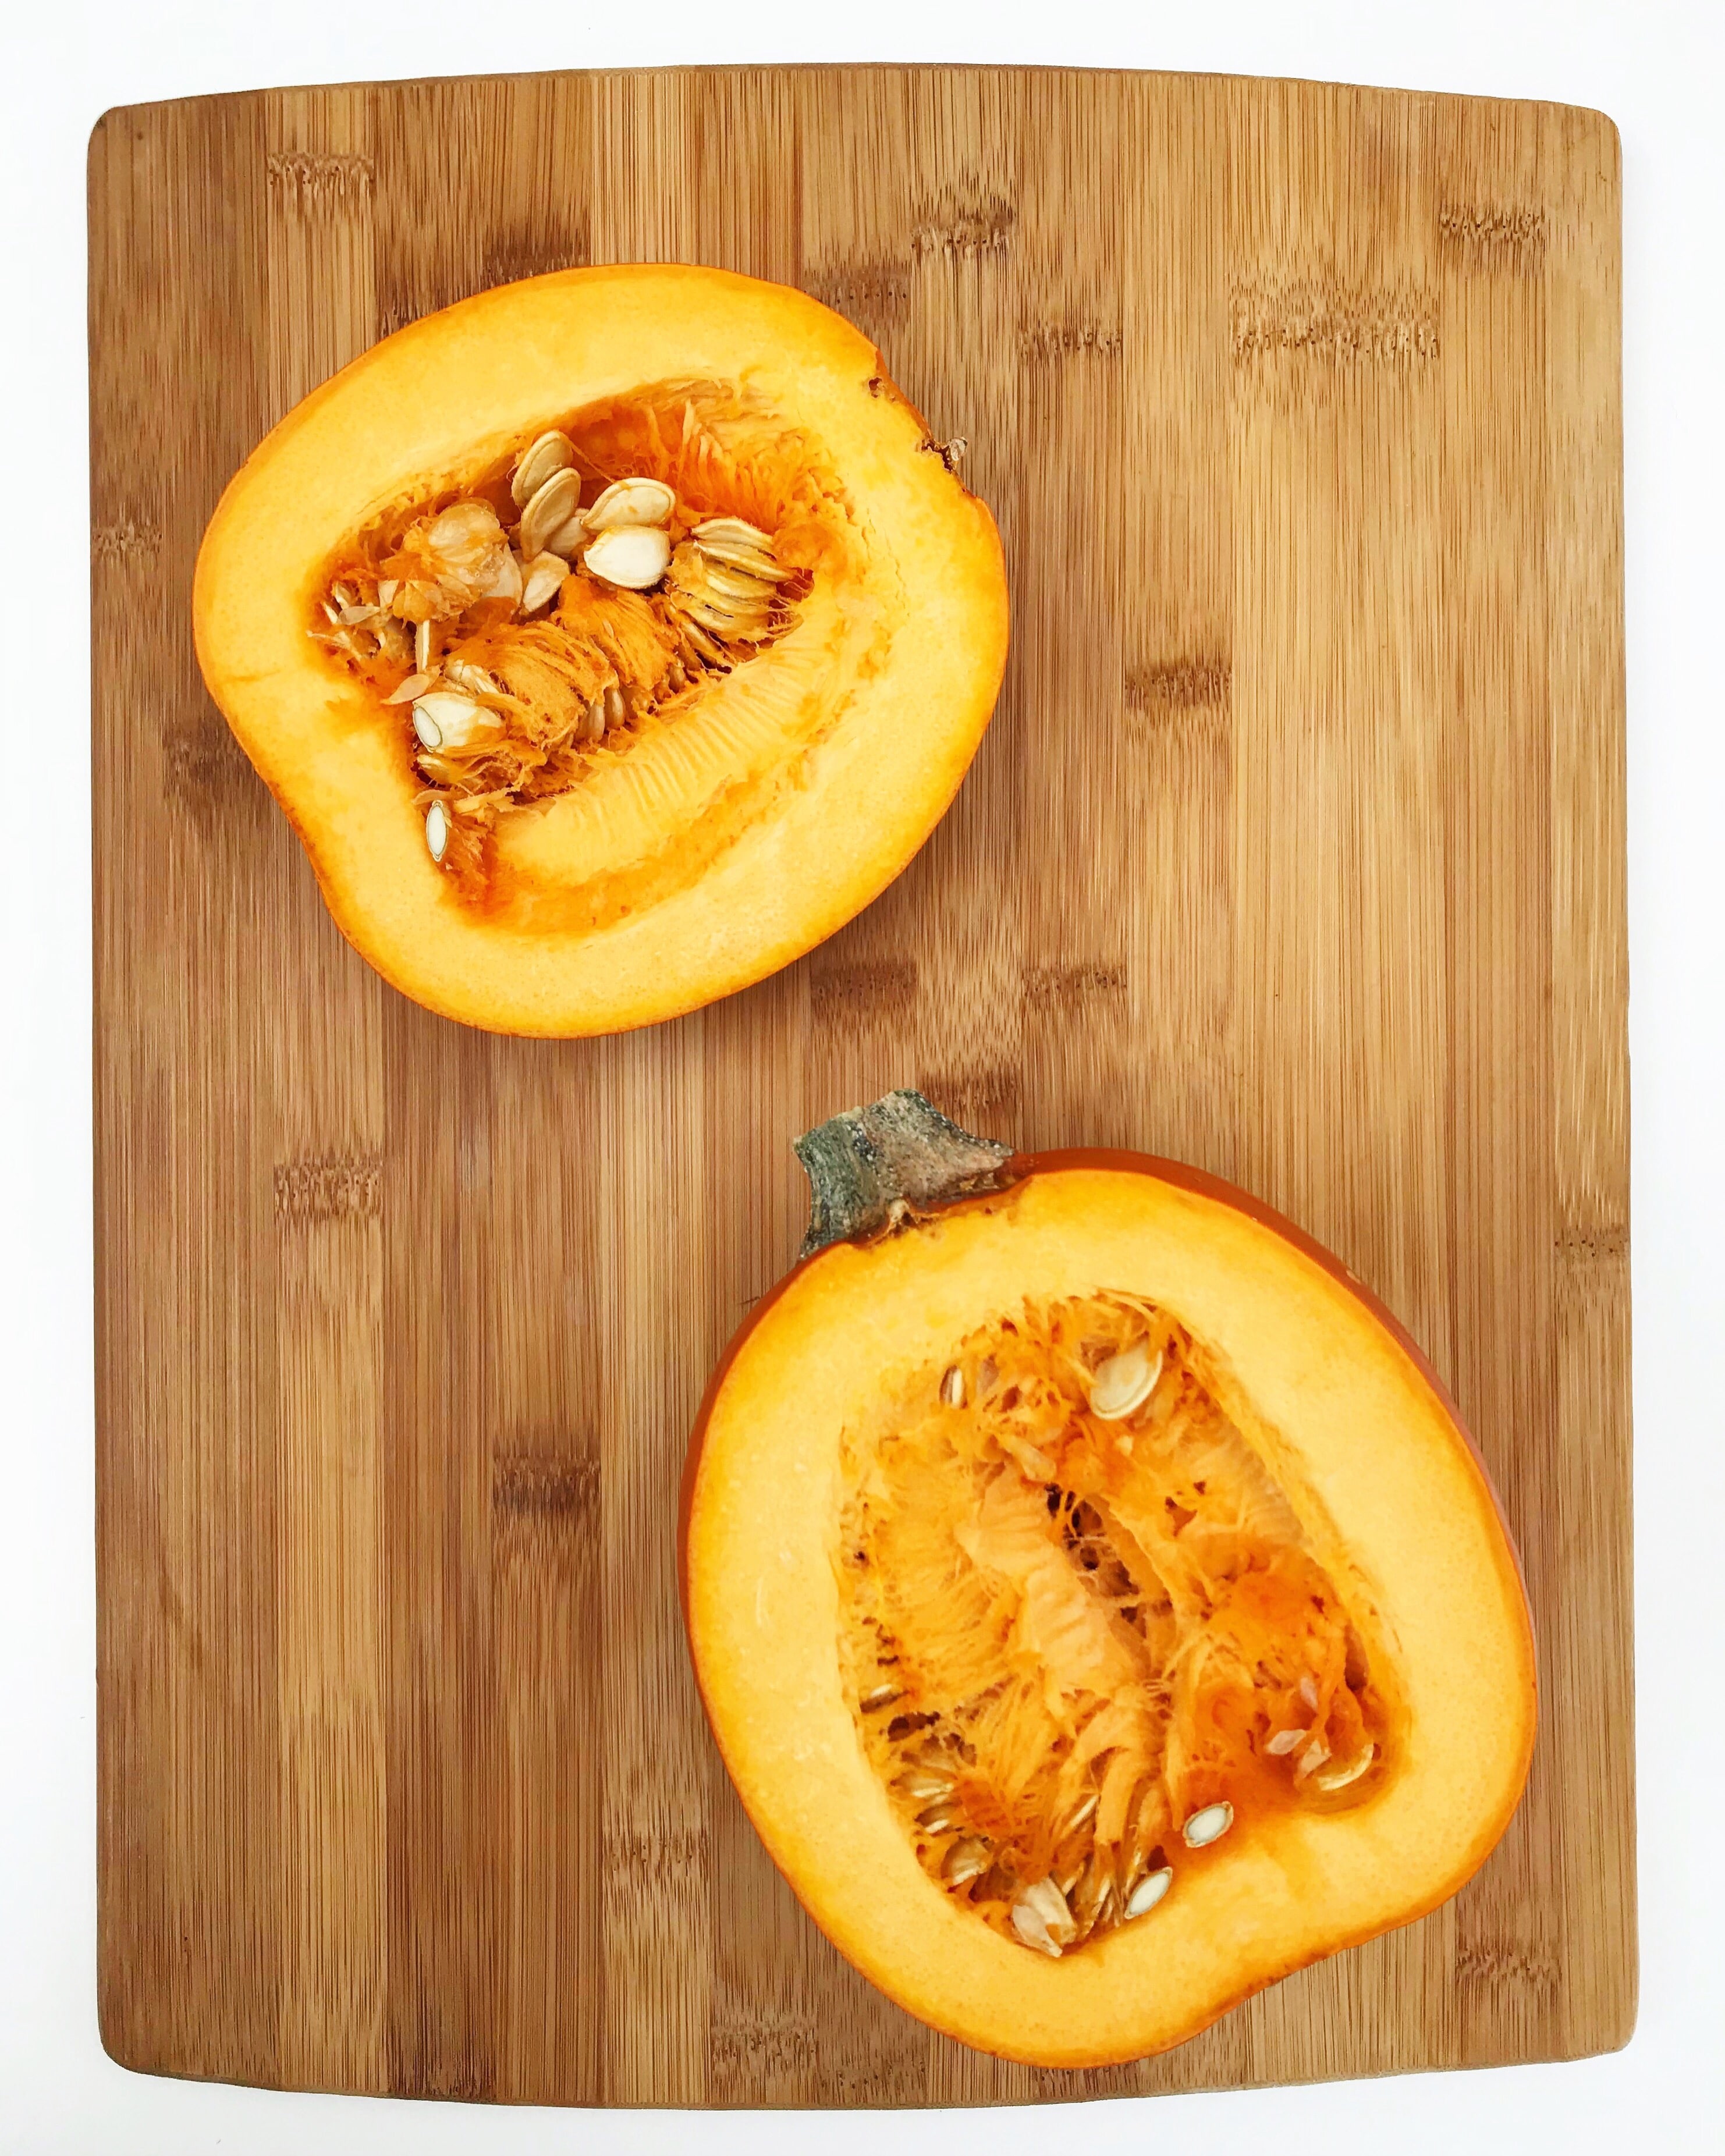 2 halves of a pumpkin on a wooden cutting board.